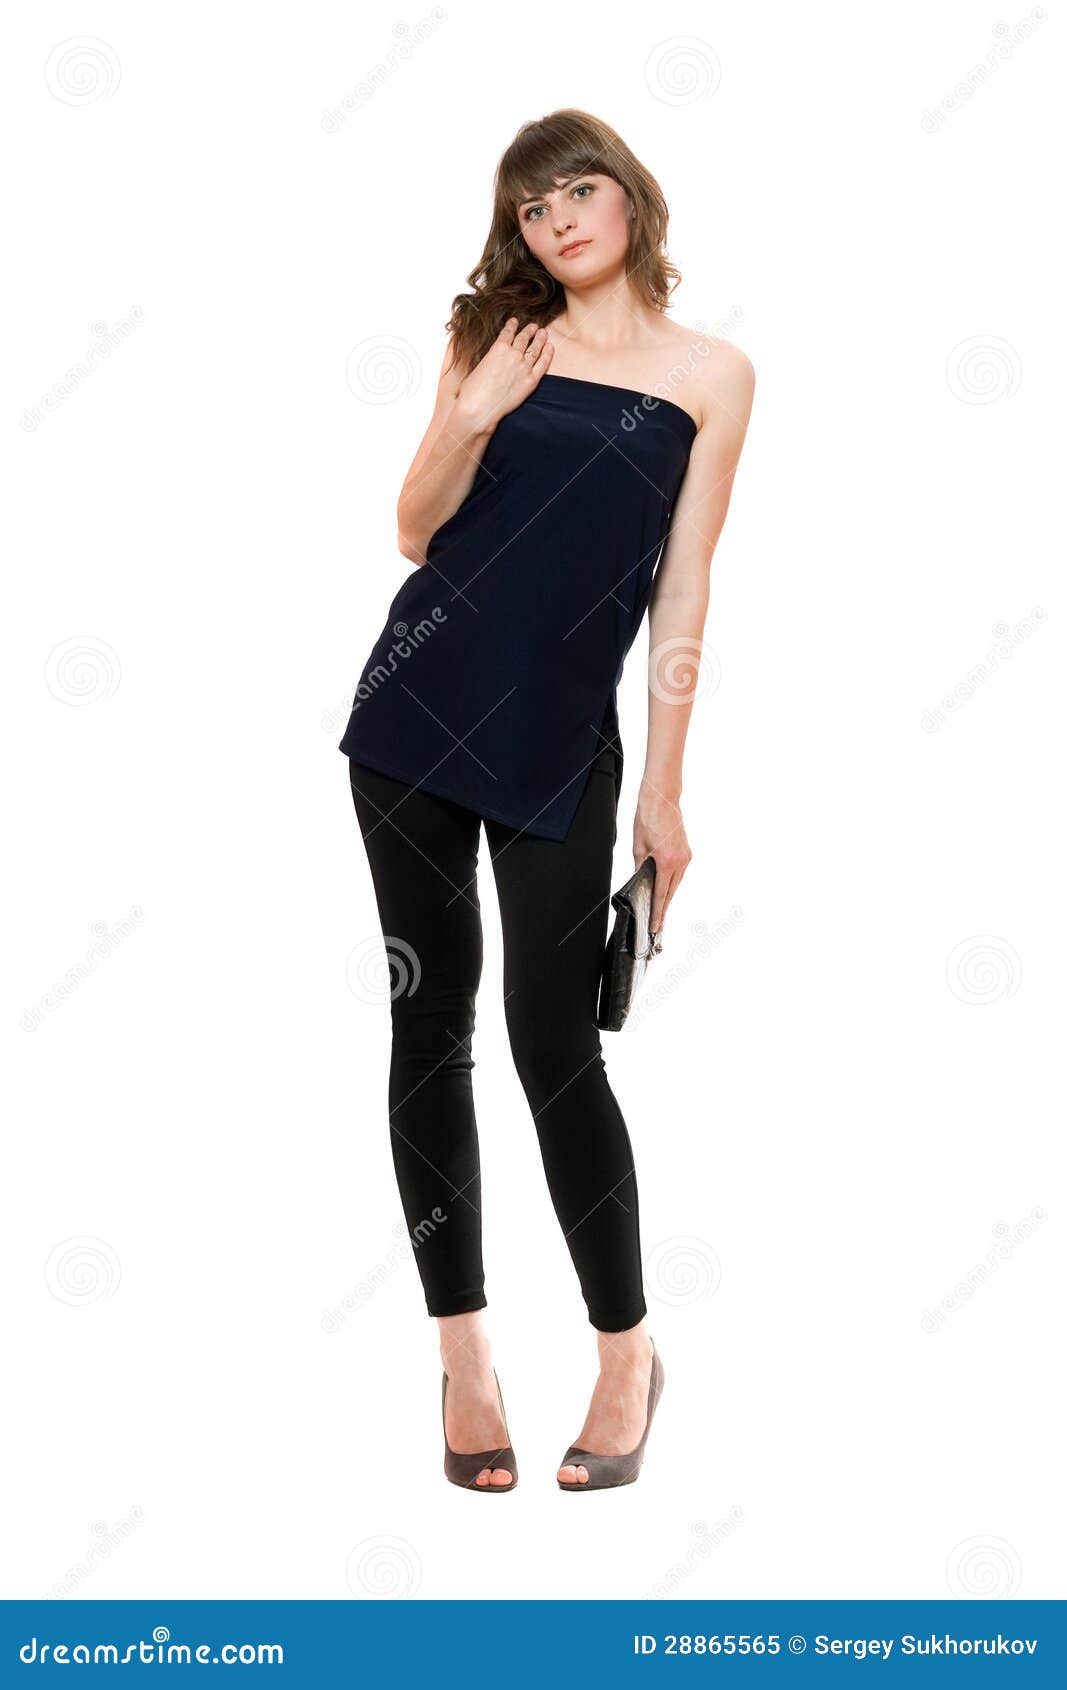 https://thumbs.dreamstime.com/z/beautiful-girl-black-leggings-isolated-28865565.jpg